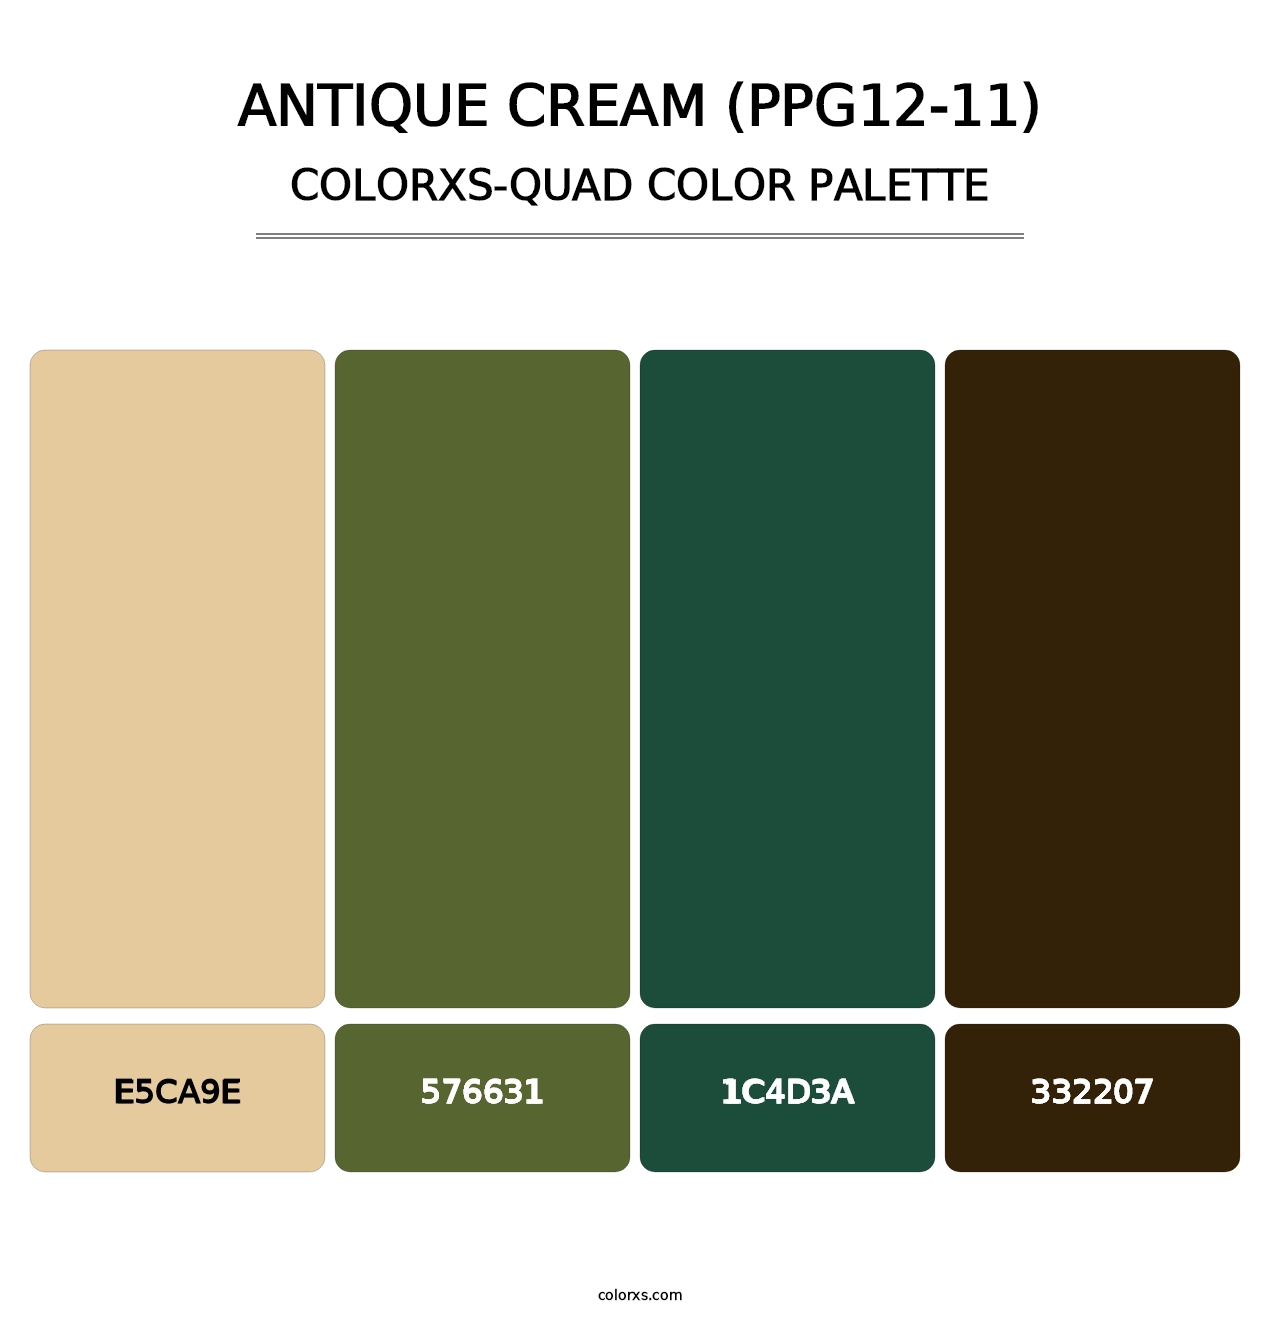 Antique Cream (PPG12-11) - Colorxs Quad Palette